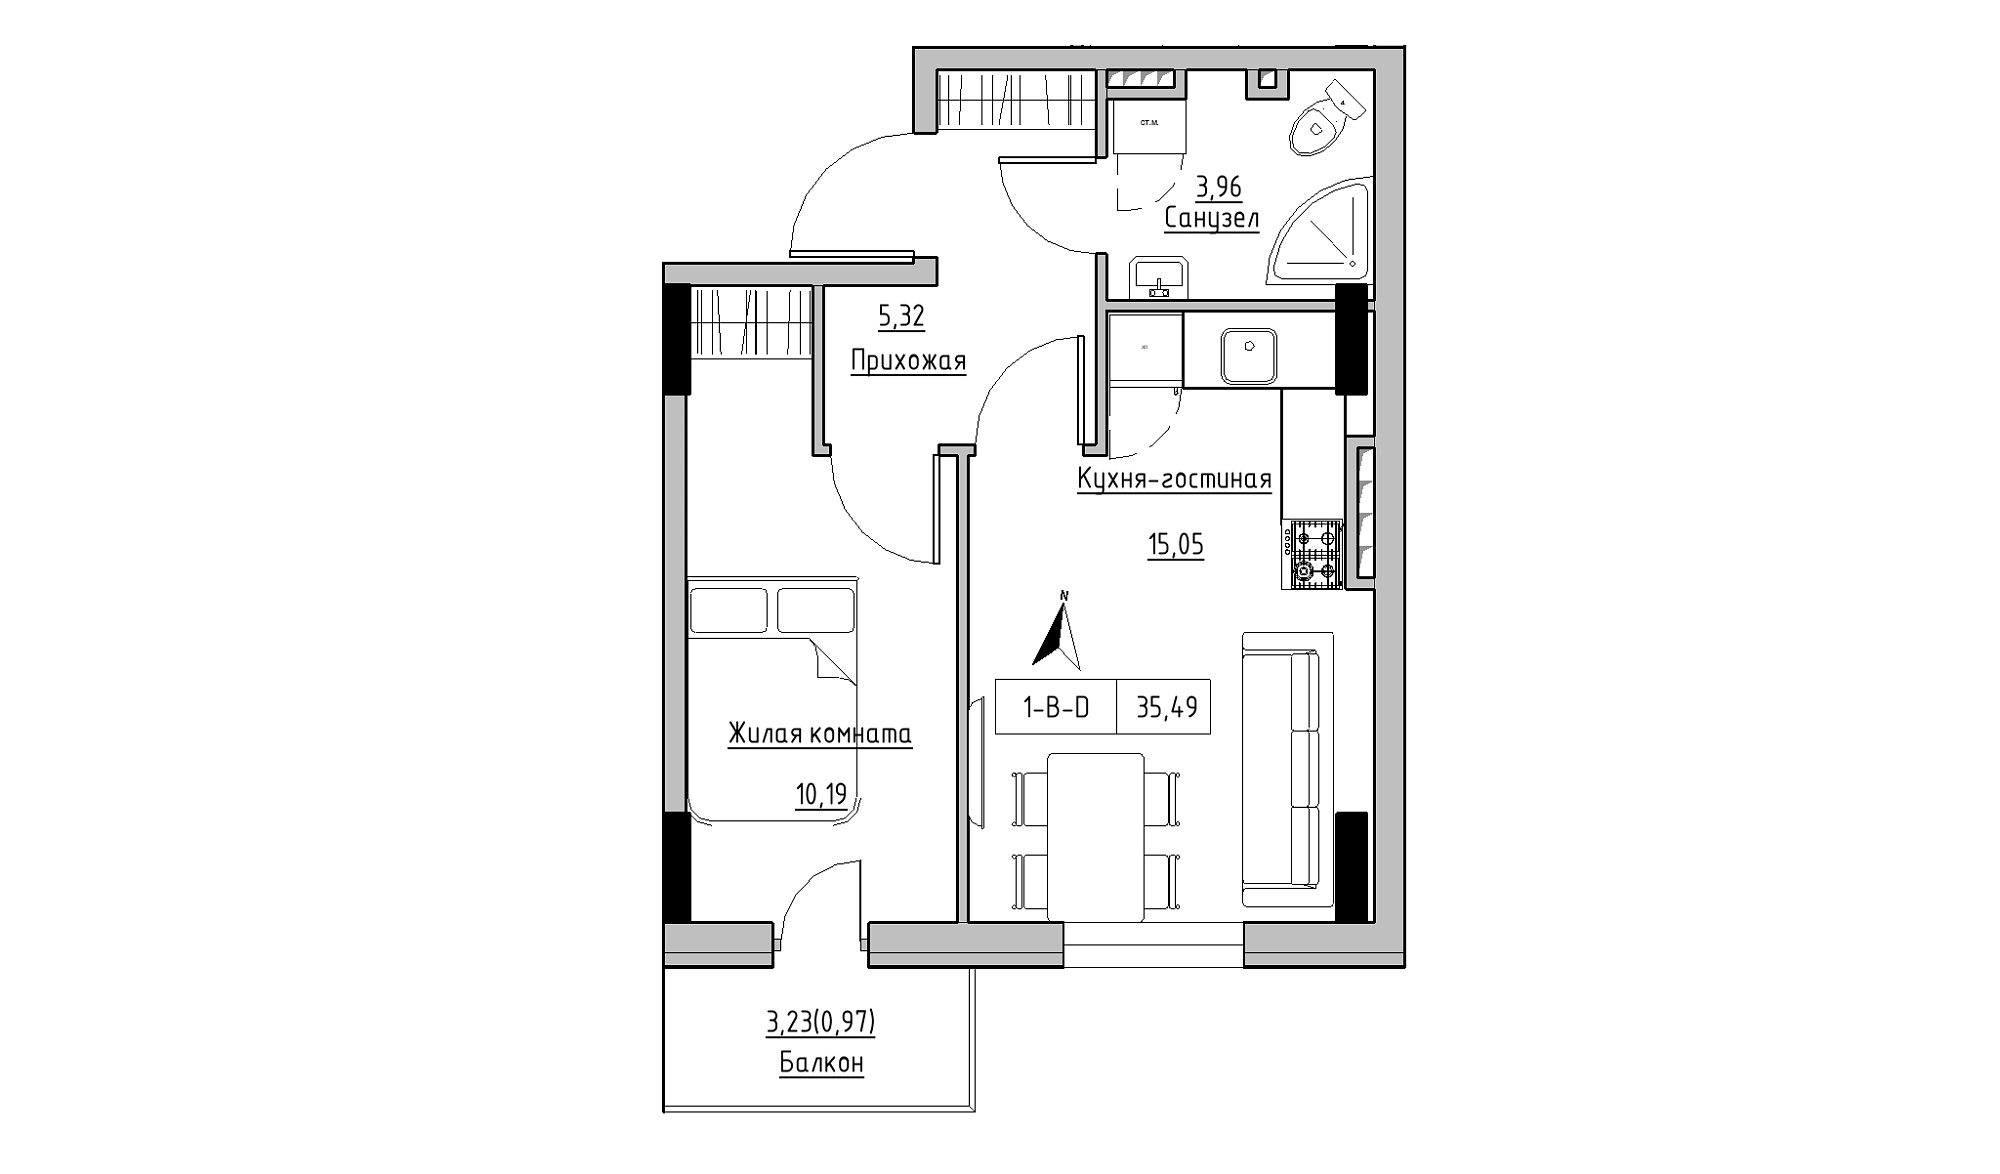 Planning 1-rm flats area 35.49m2, KS-025-04/0011.